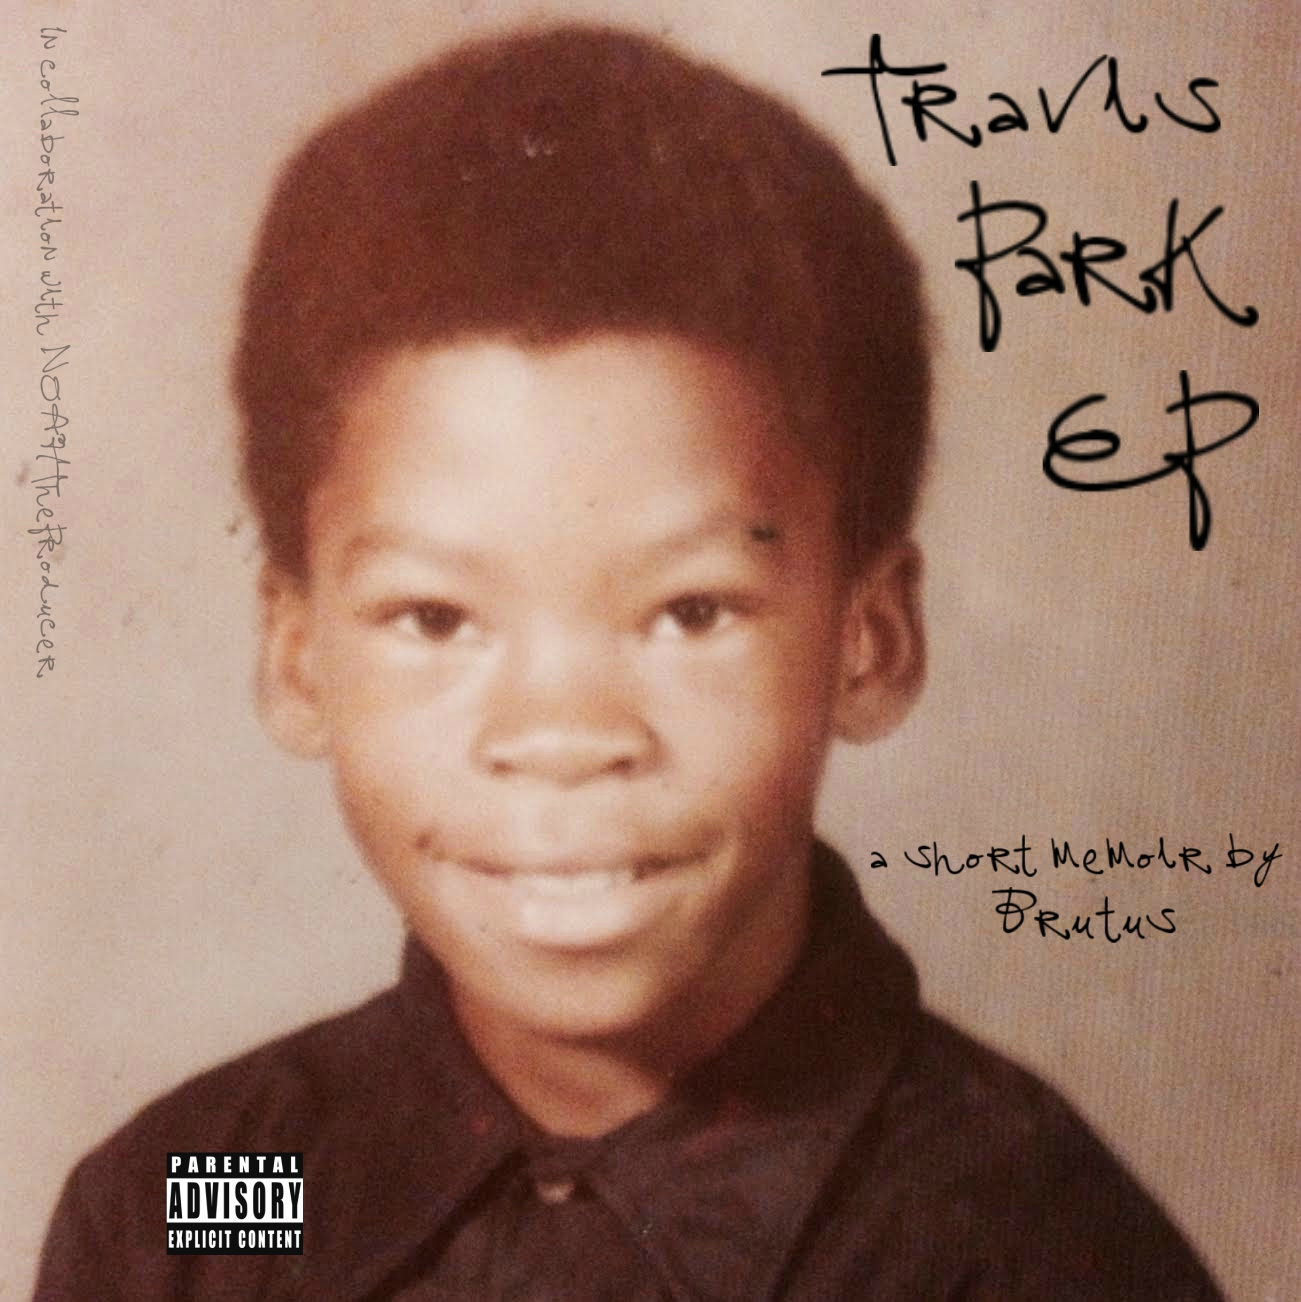 Travis Park EP.jpg